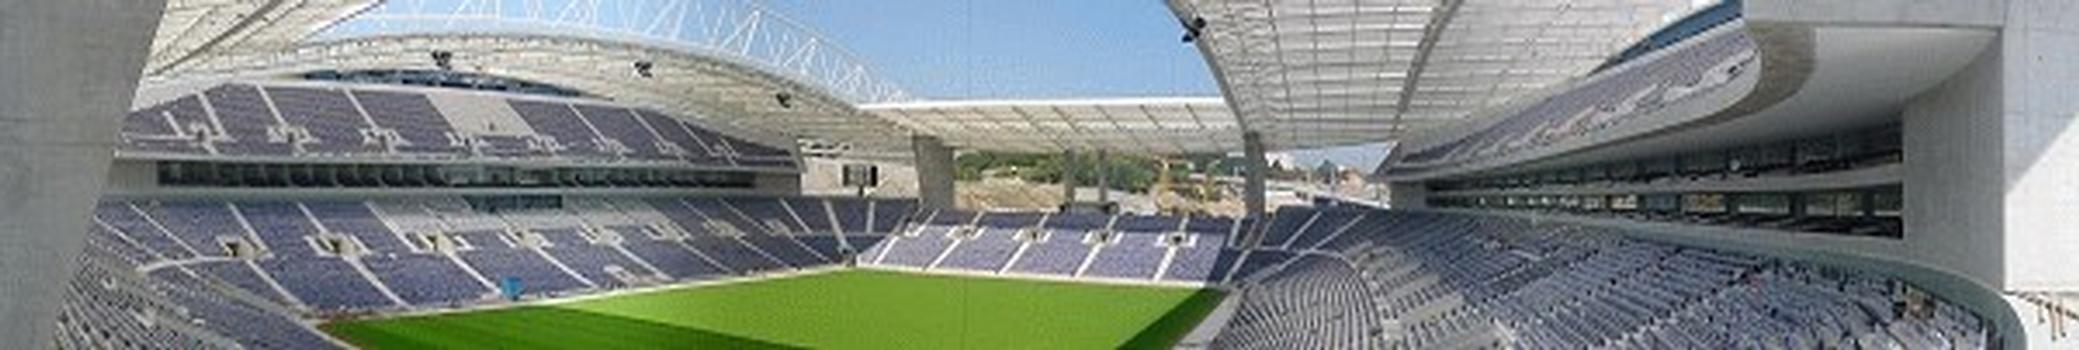 Drachen-Stadion, Porto – Internes Panorama (Simulation)